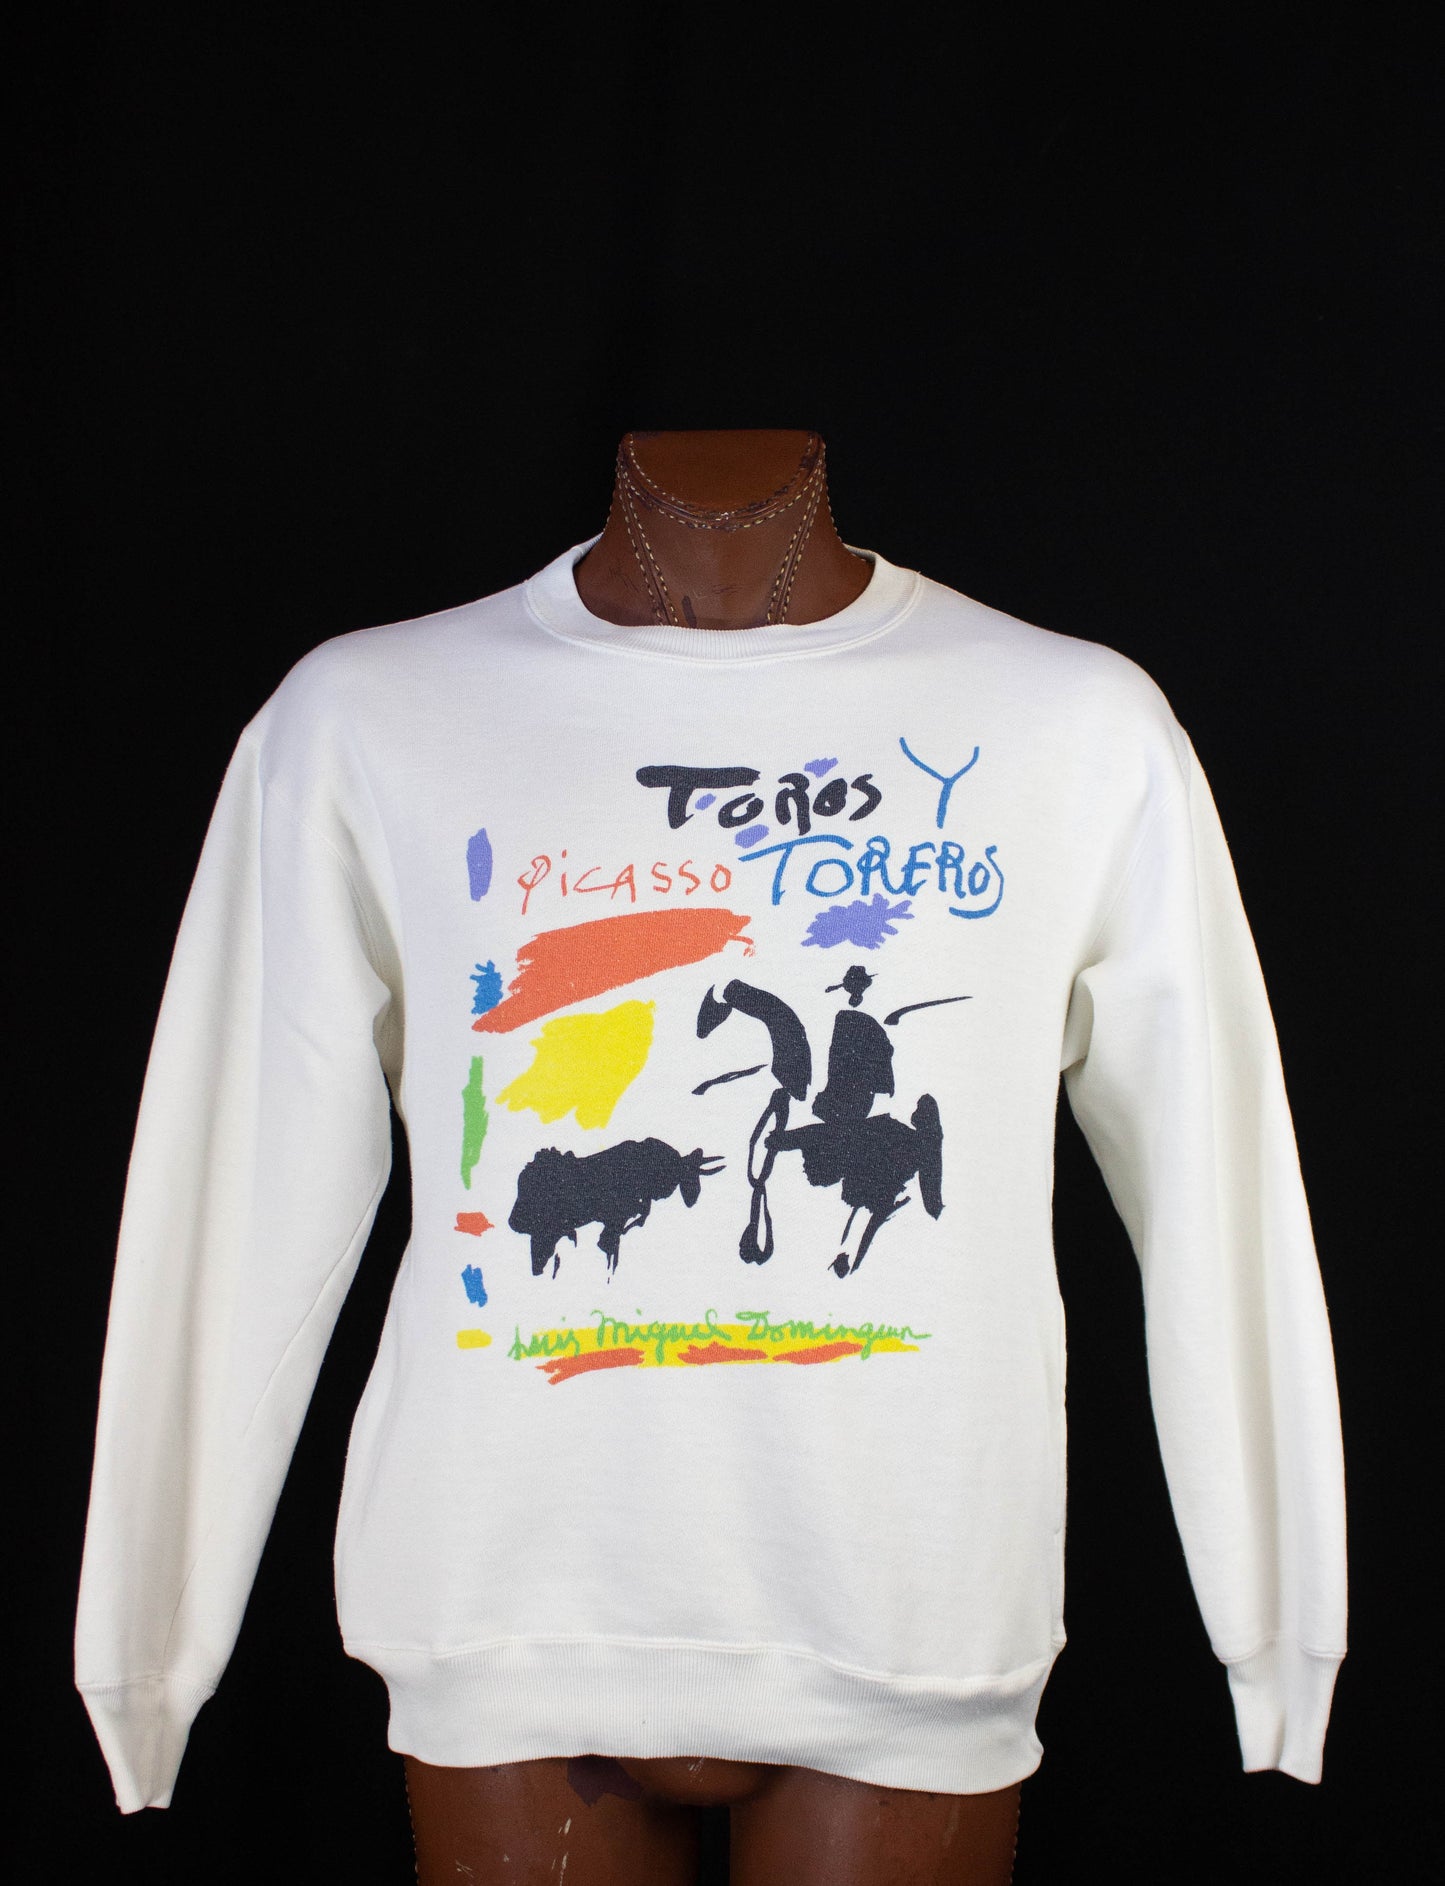 Vintage 90s Pablo Picasso Toros Toreros Graphic Crewneck Sweatshirt With Pockets Medium